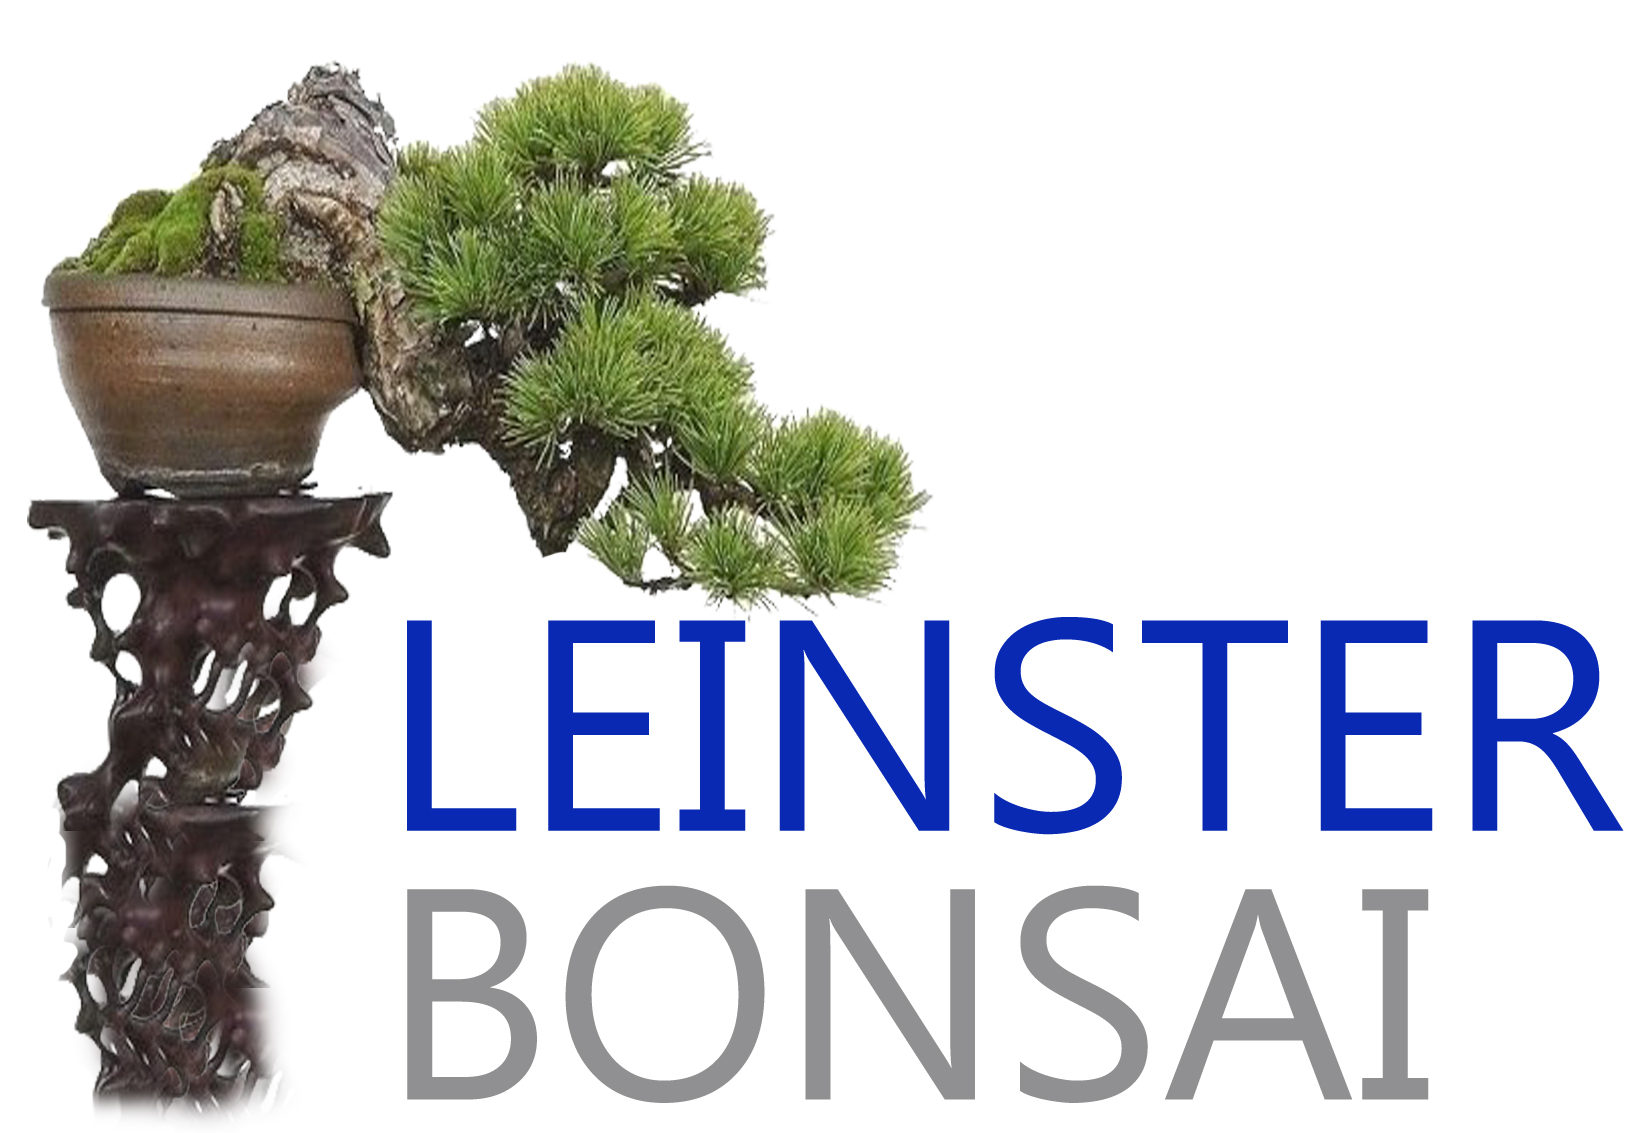 Leinster Bonsai logo2